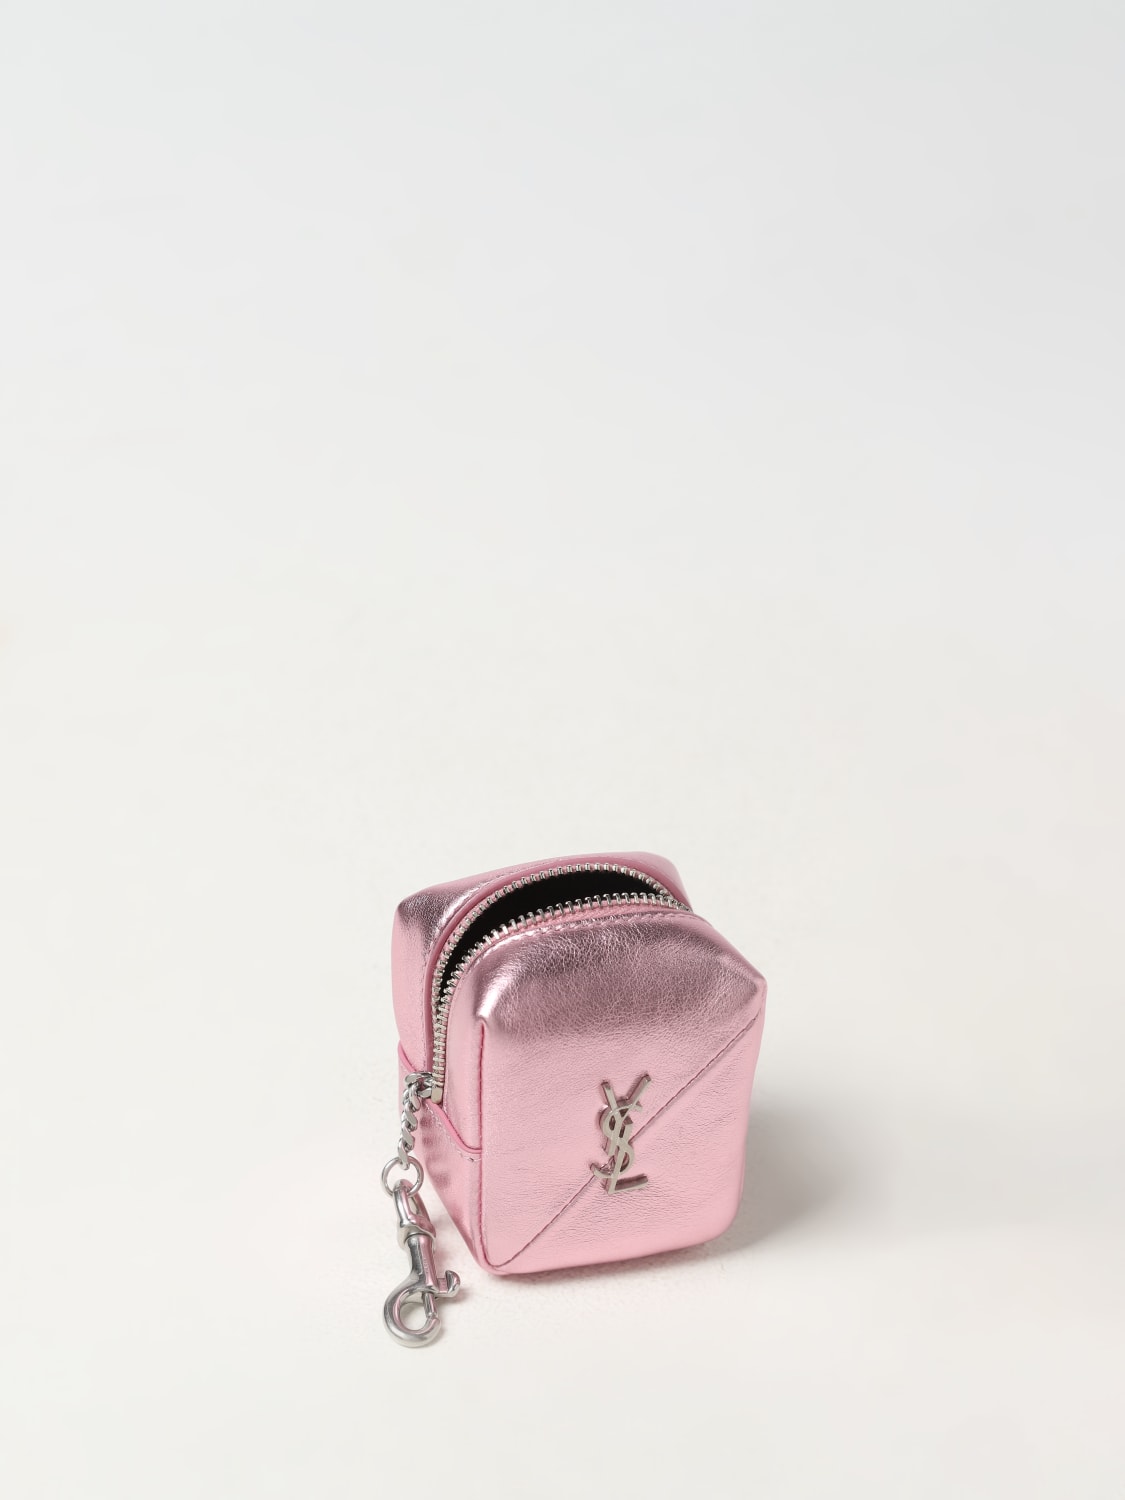 SAINT LAURENT: key chain for woman - Pink  Saint Laurent key chain  669964AAAA0 online at